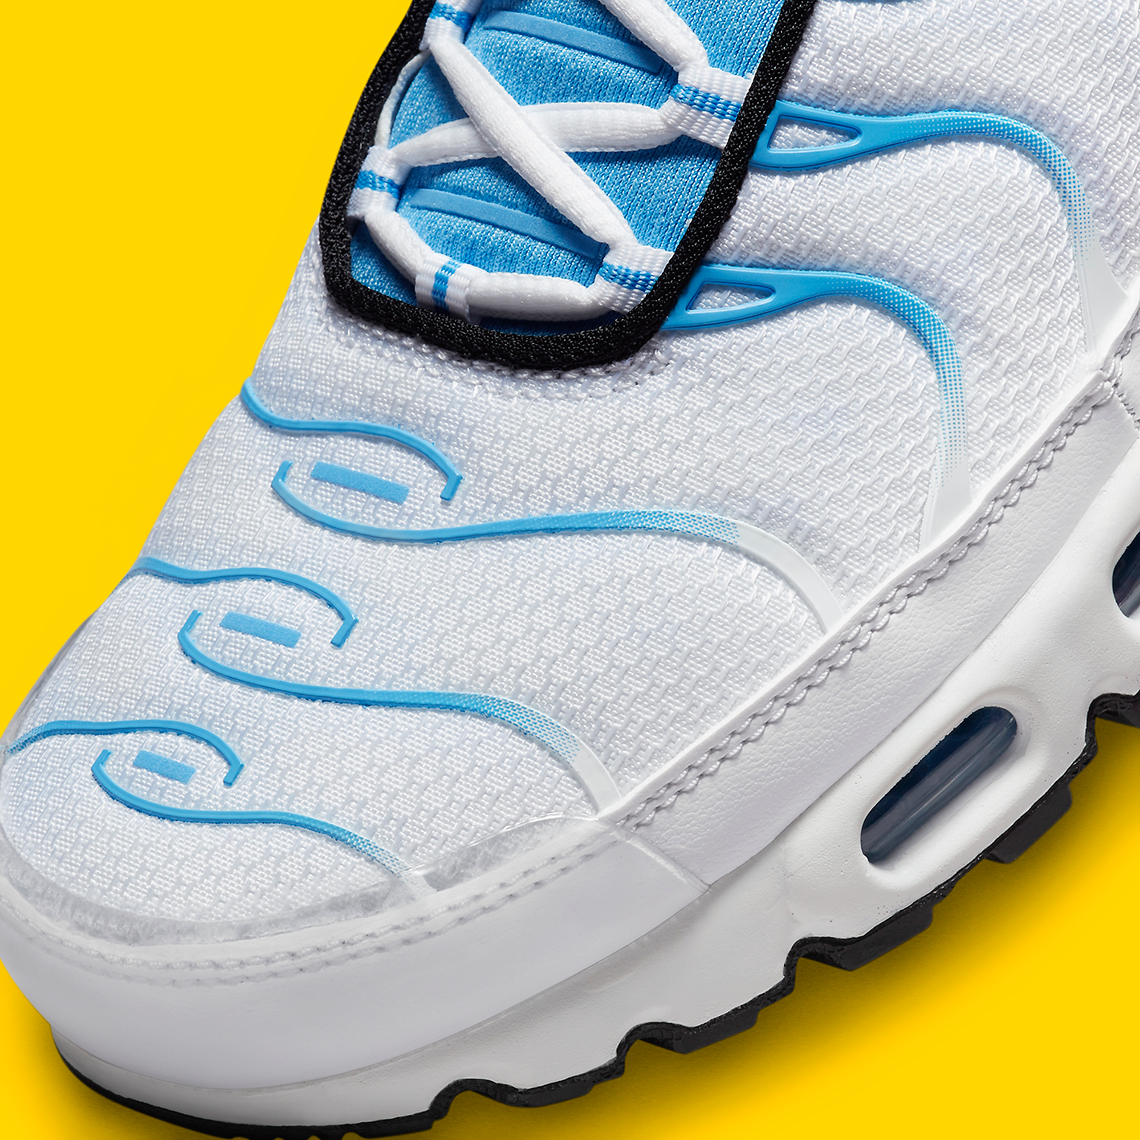 Nike Air Max Plus “White/University Blue” DM0032-101 | SneakerNews.com